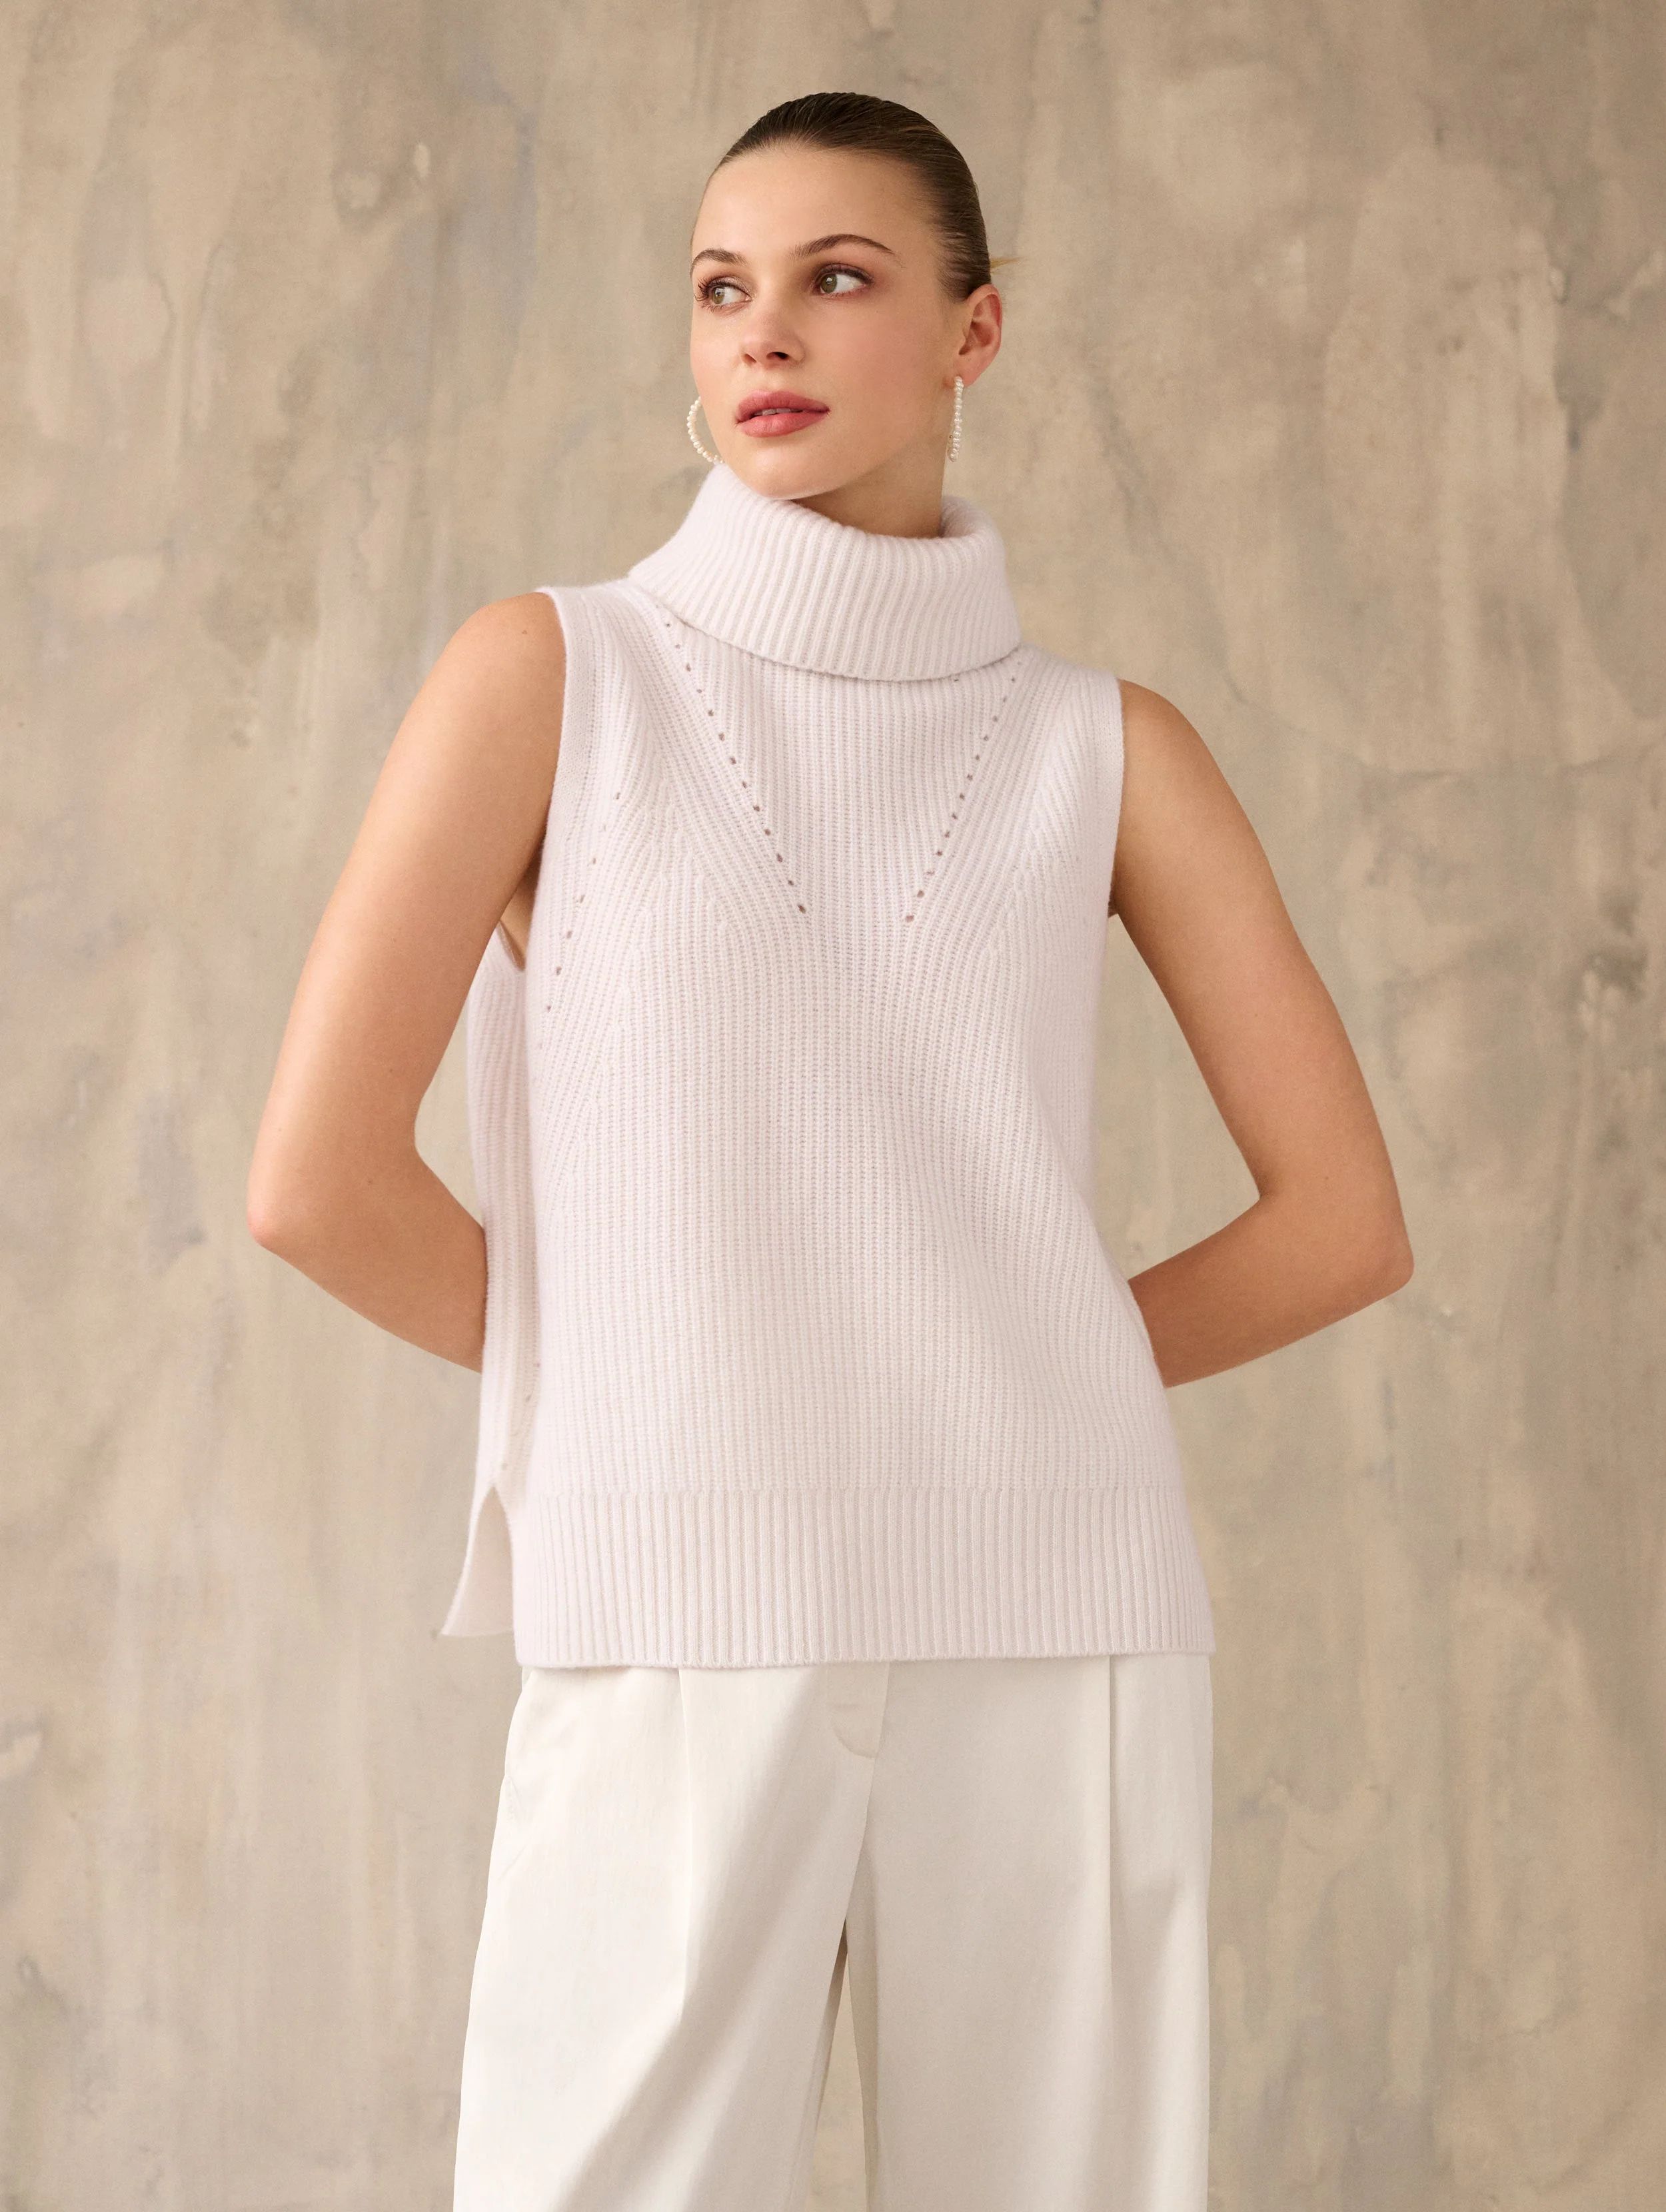 White + Warren Cashmere Sleeveless Turtleneck Sweater in Soft White size Large | White and Warren